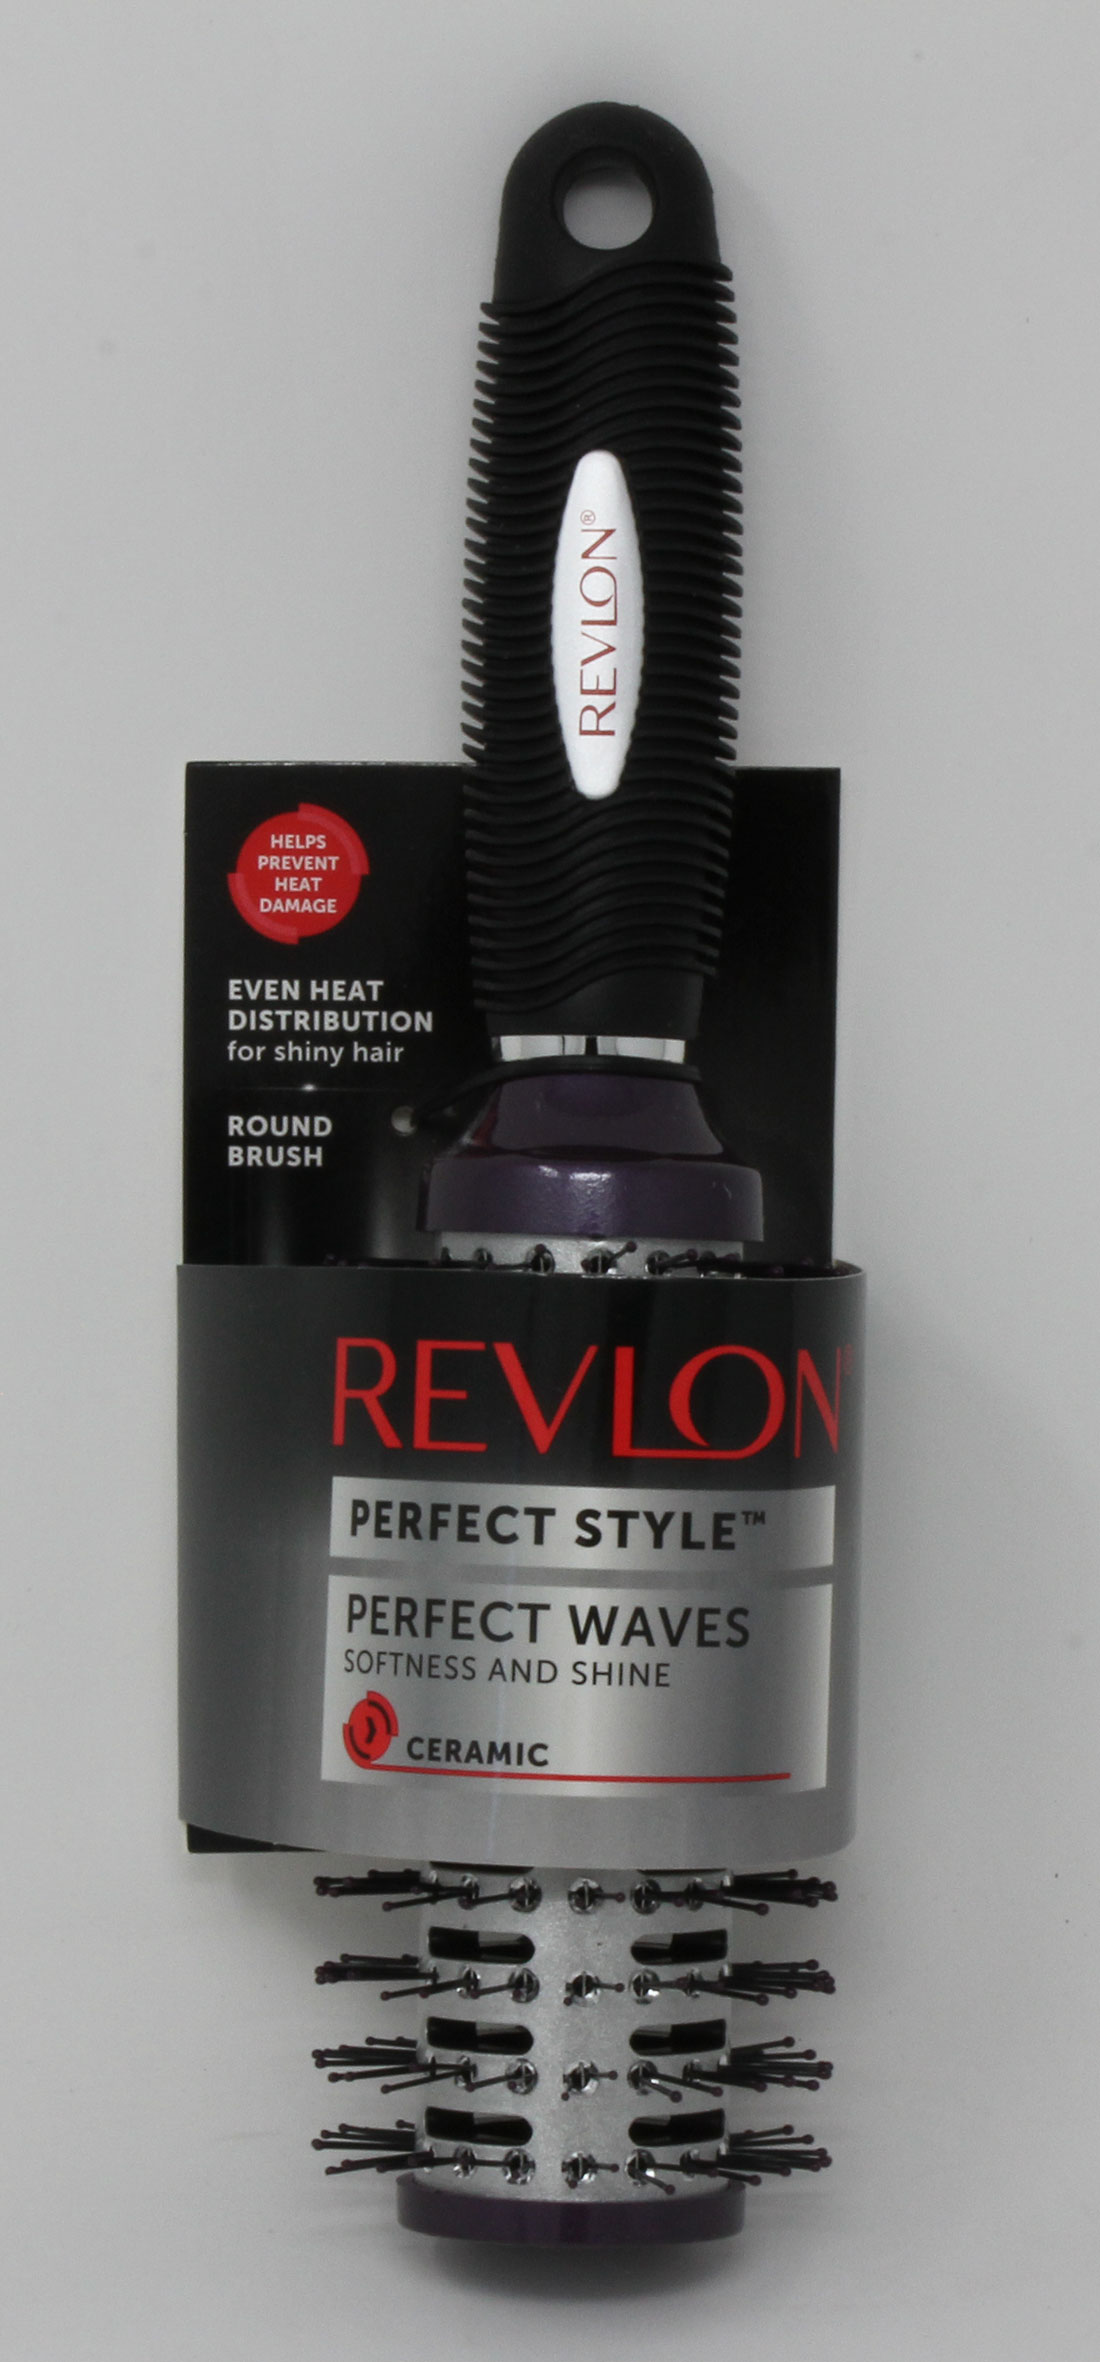 Revlon perfect style, perfect waves round brush